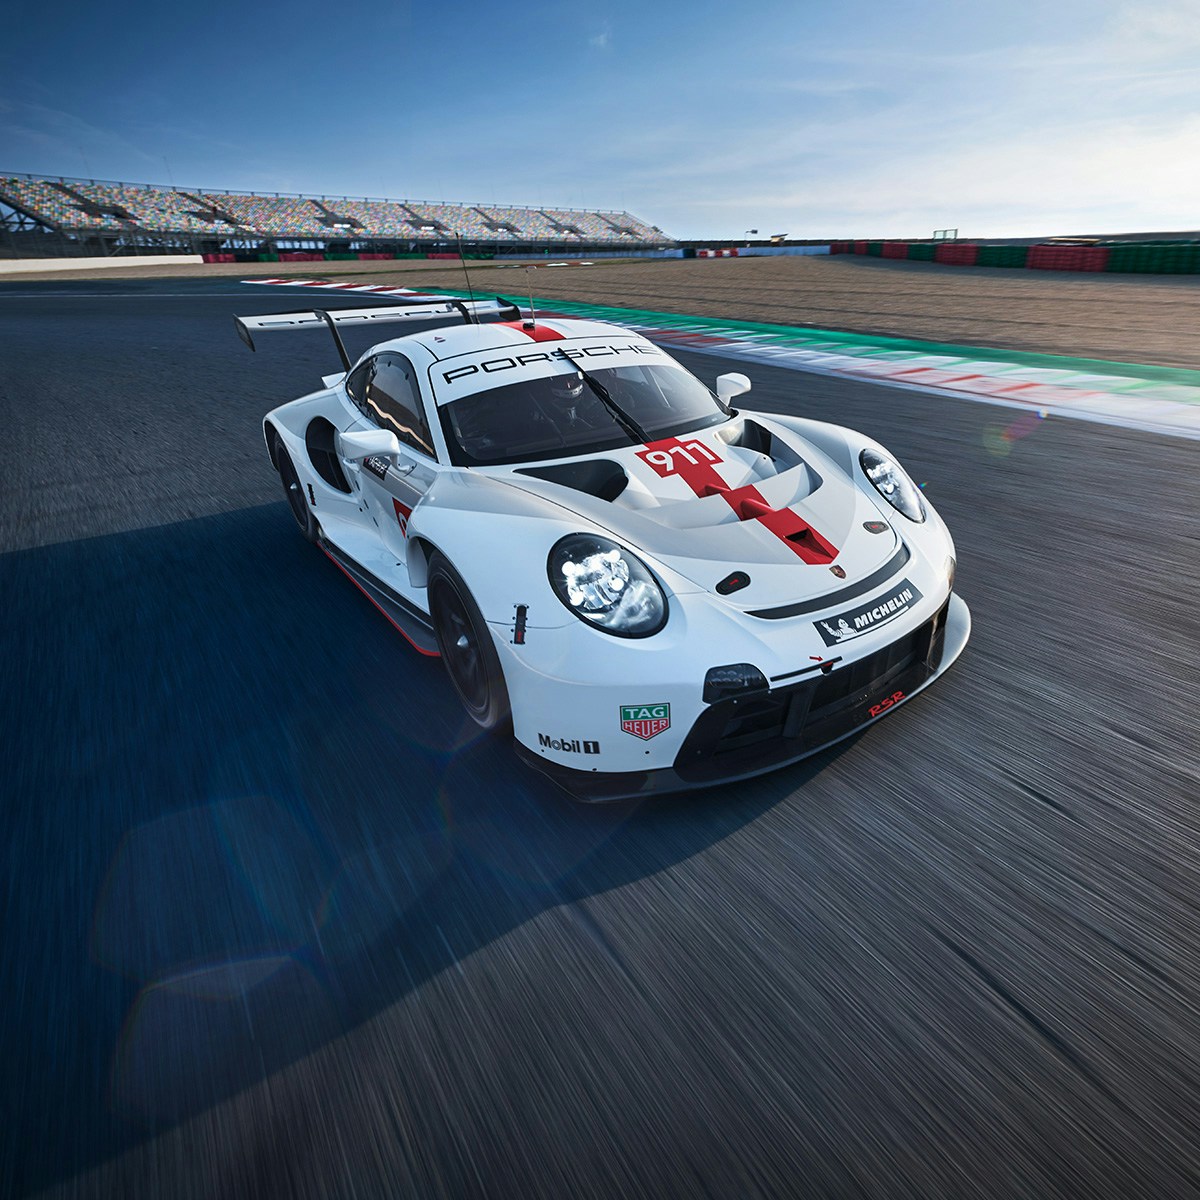 A Porsche race car on a track.